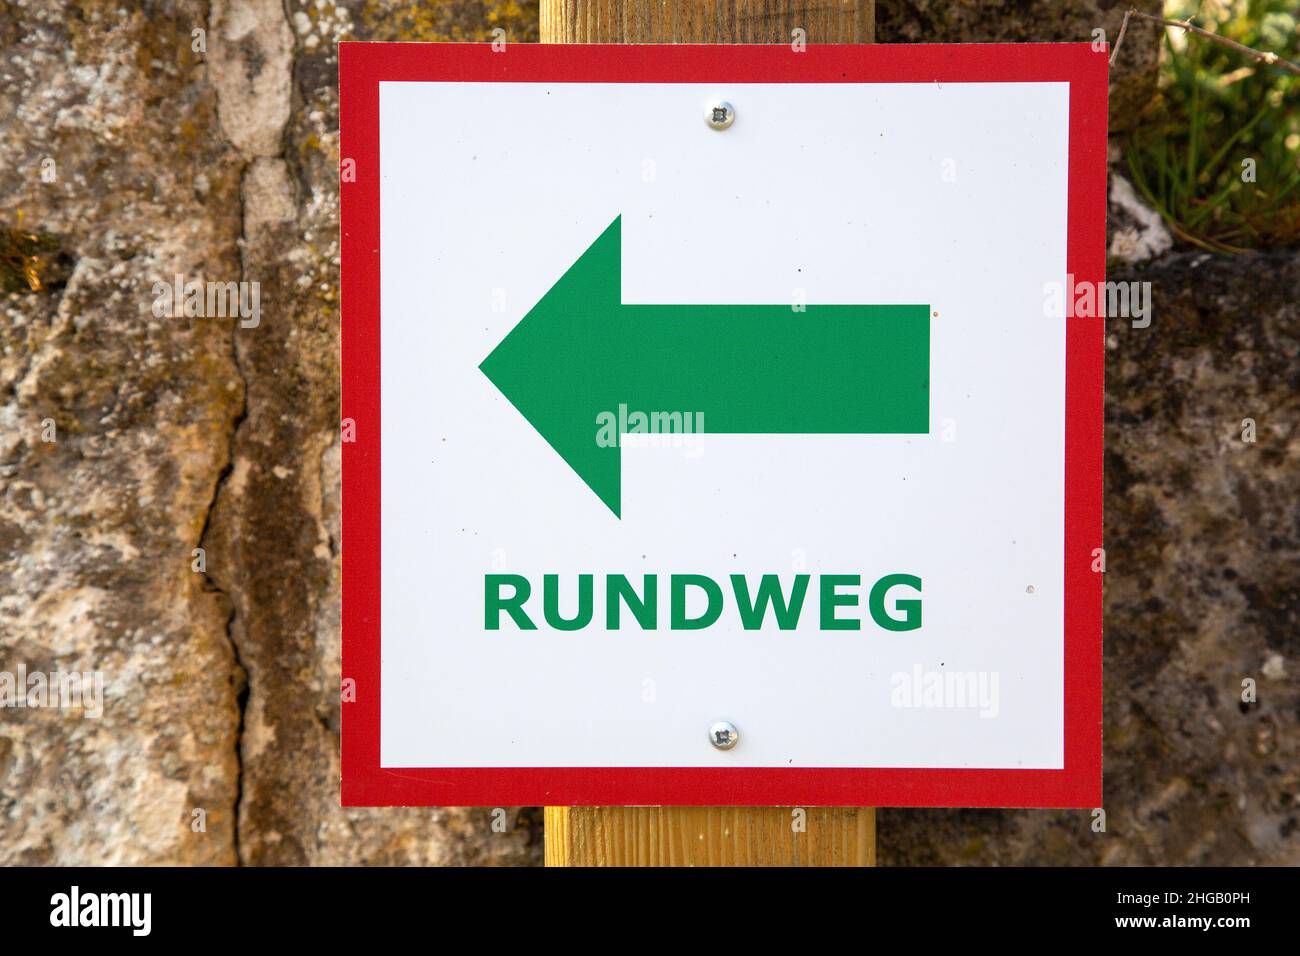 Segnale direzionale tedesco 'Rundweg' che si traduce in "Circular Trail" inglese Foto Stock